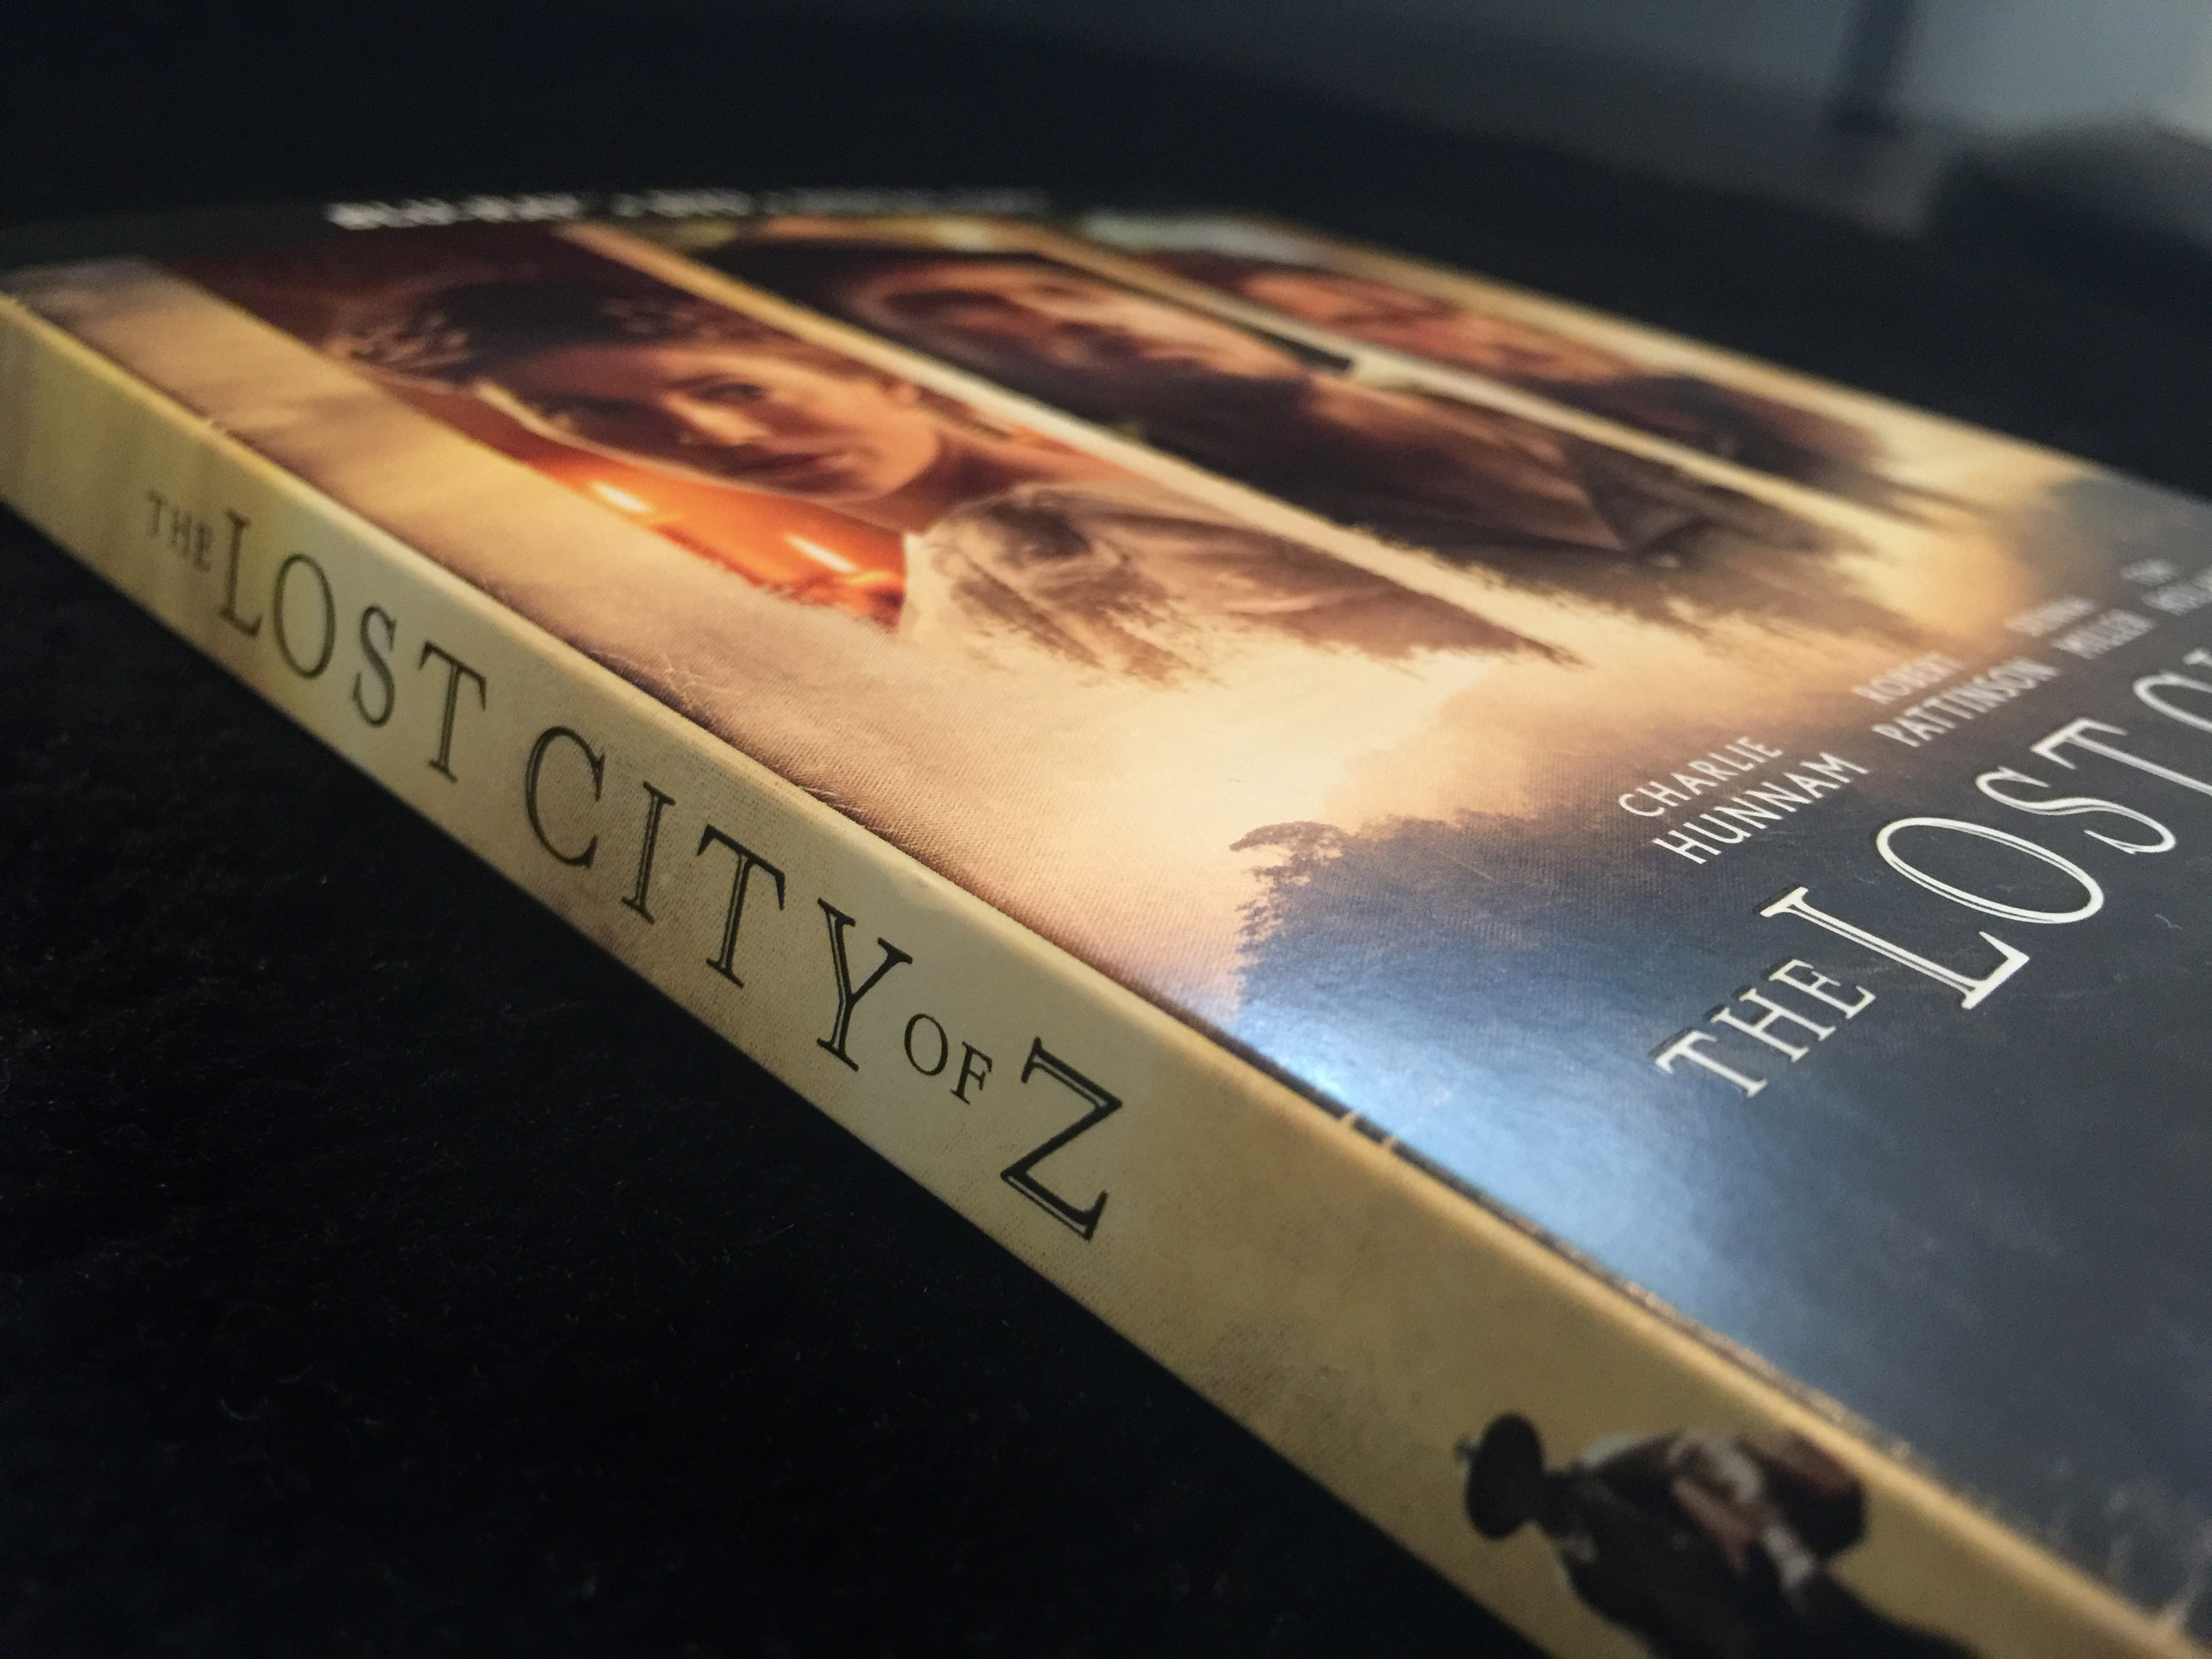 Slipcover - The Lost City of Z (Blu-ray Slipcover) [Canada] | Hi 